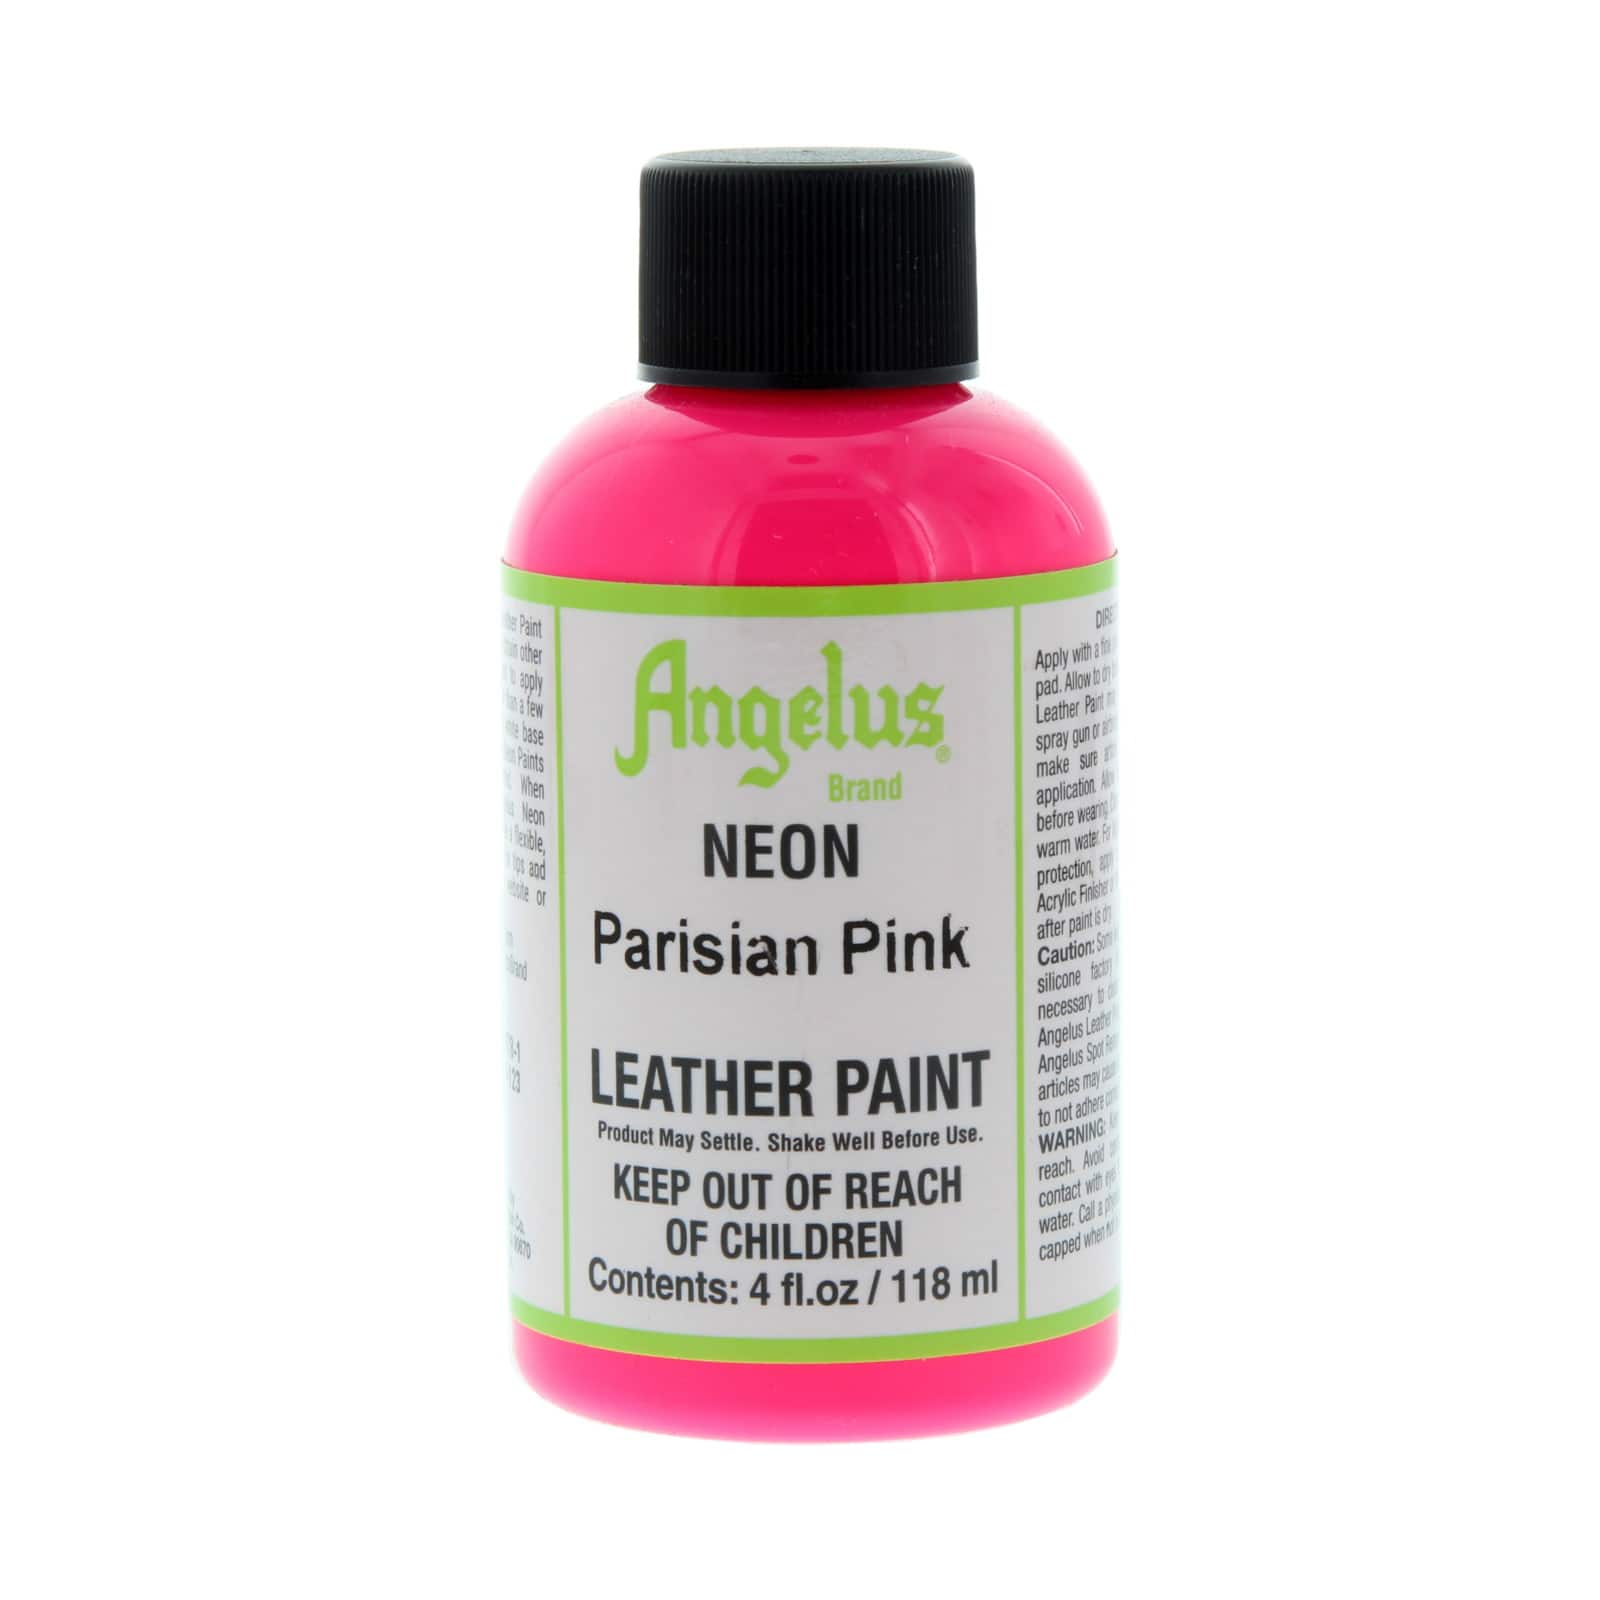 Angelus® Neon Leather Paint, 4oz.